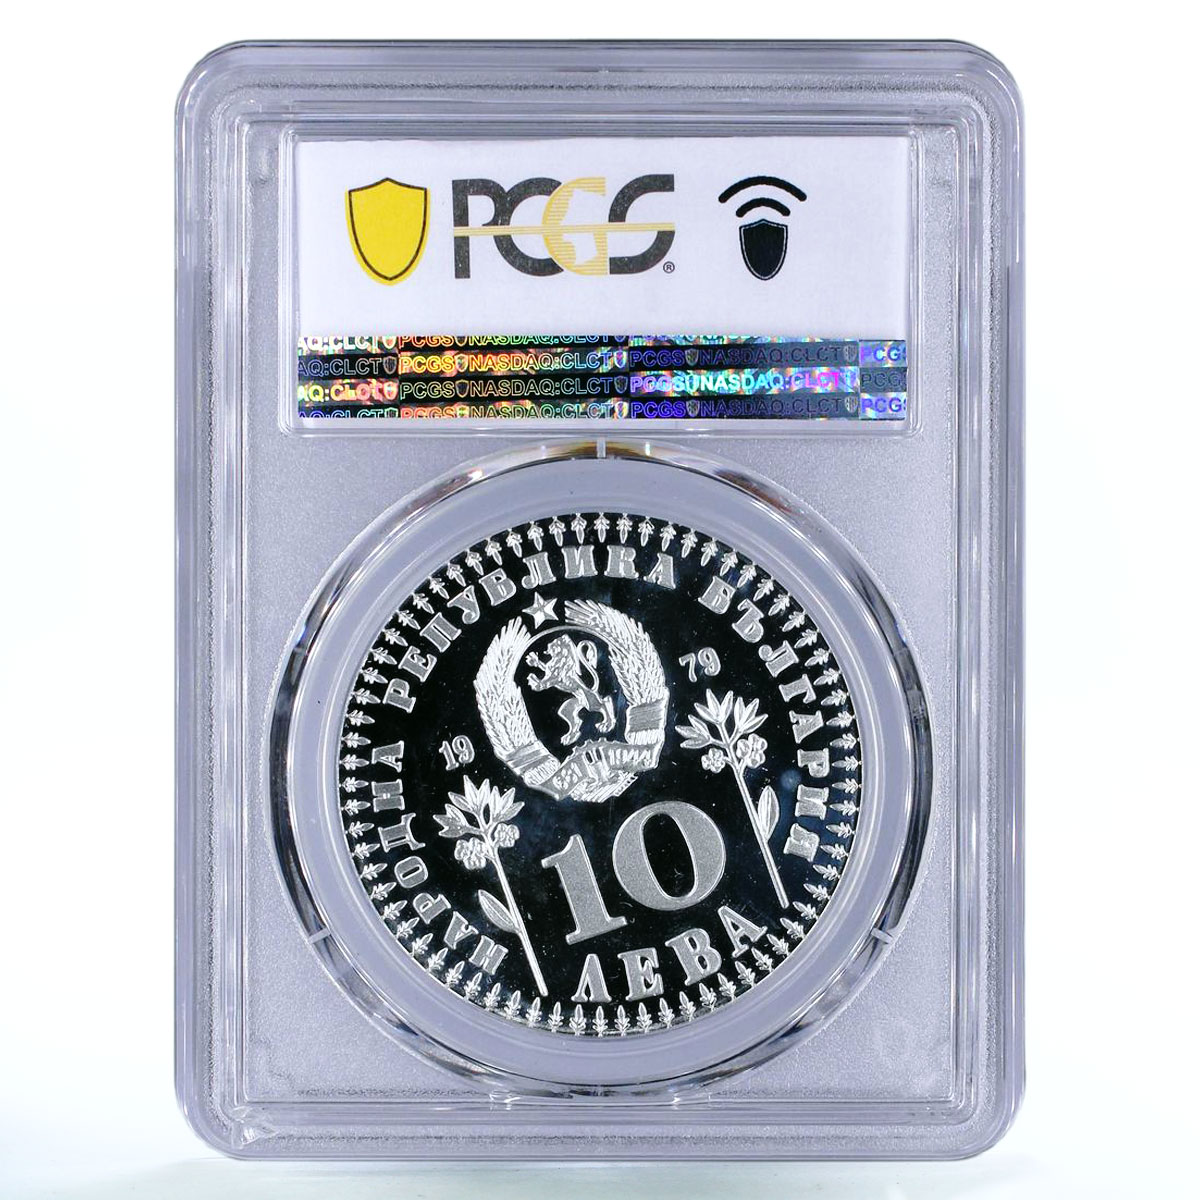 Bulgaria 10 leva International Year of the Child PR68 PCGS silver coin 1979